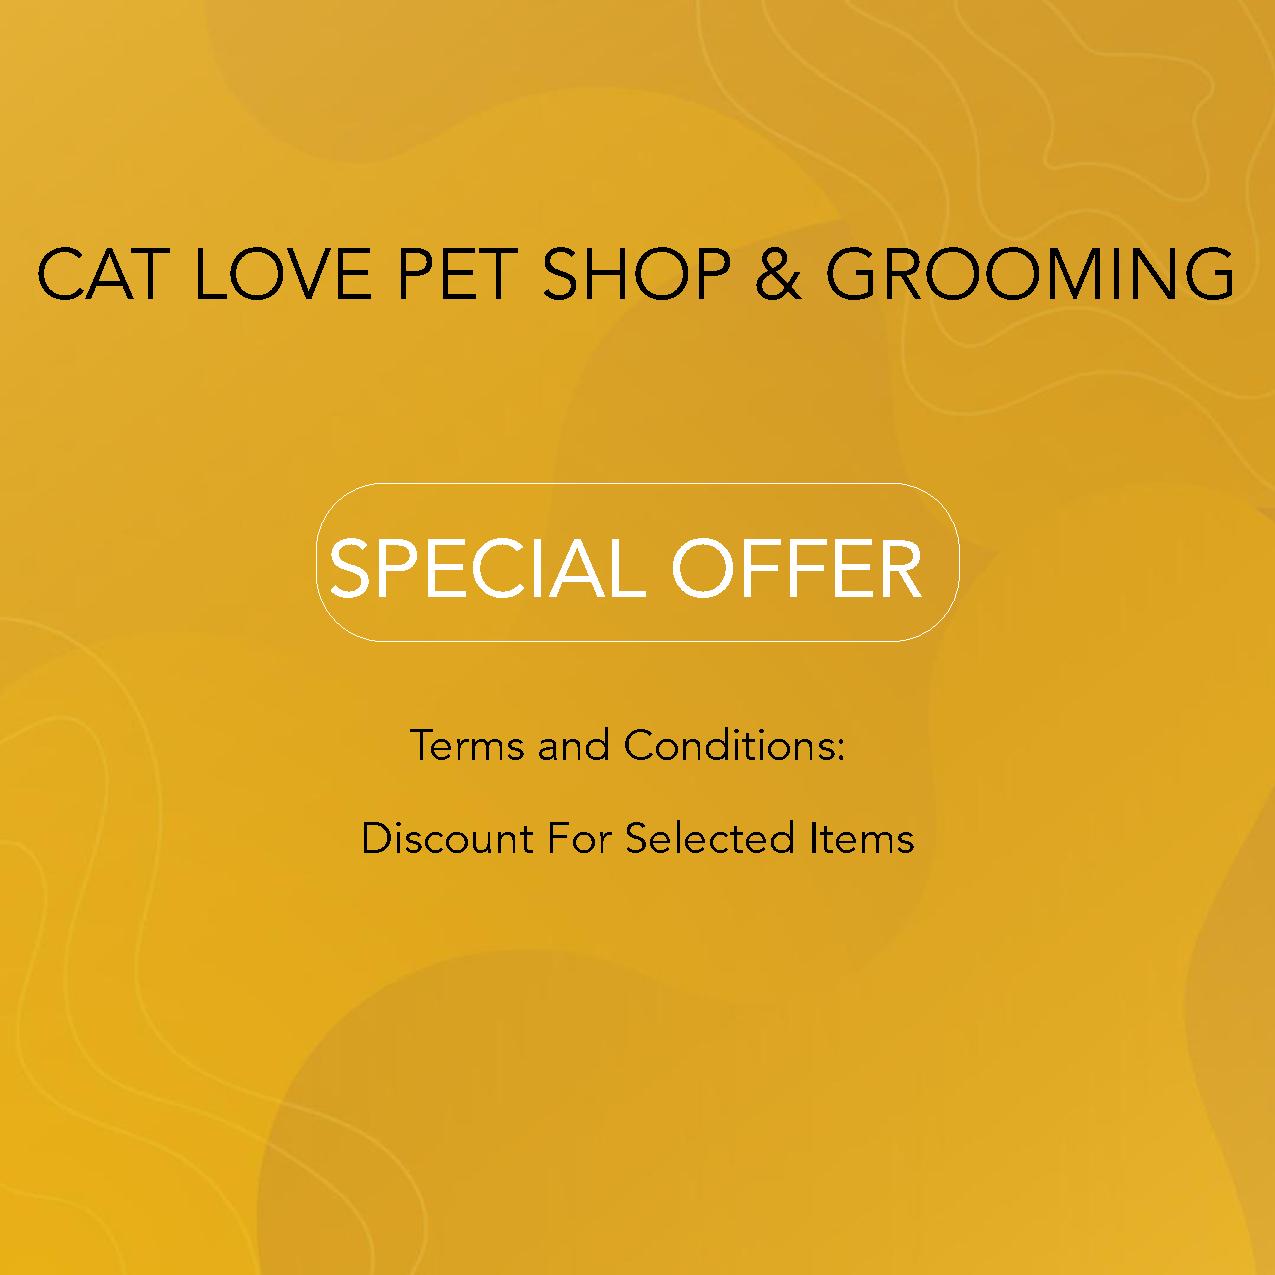 CAT LOVE PET SHOP & GROOMING